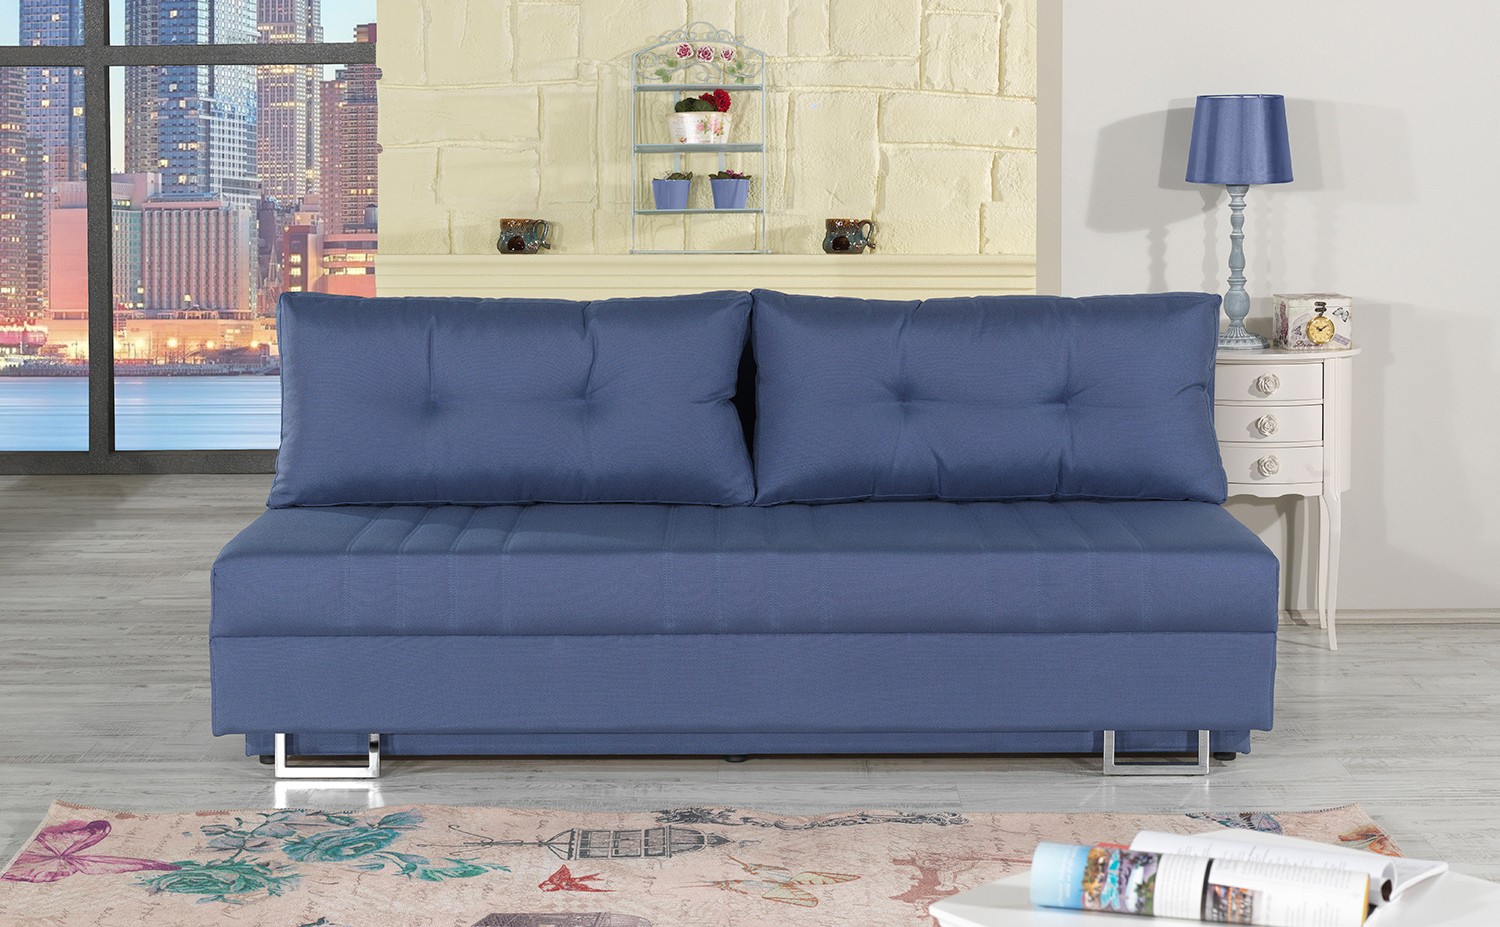 Blue Queen size Fabric Sofa Bed Avana - Sofa Beds Star Modern Furniture